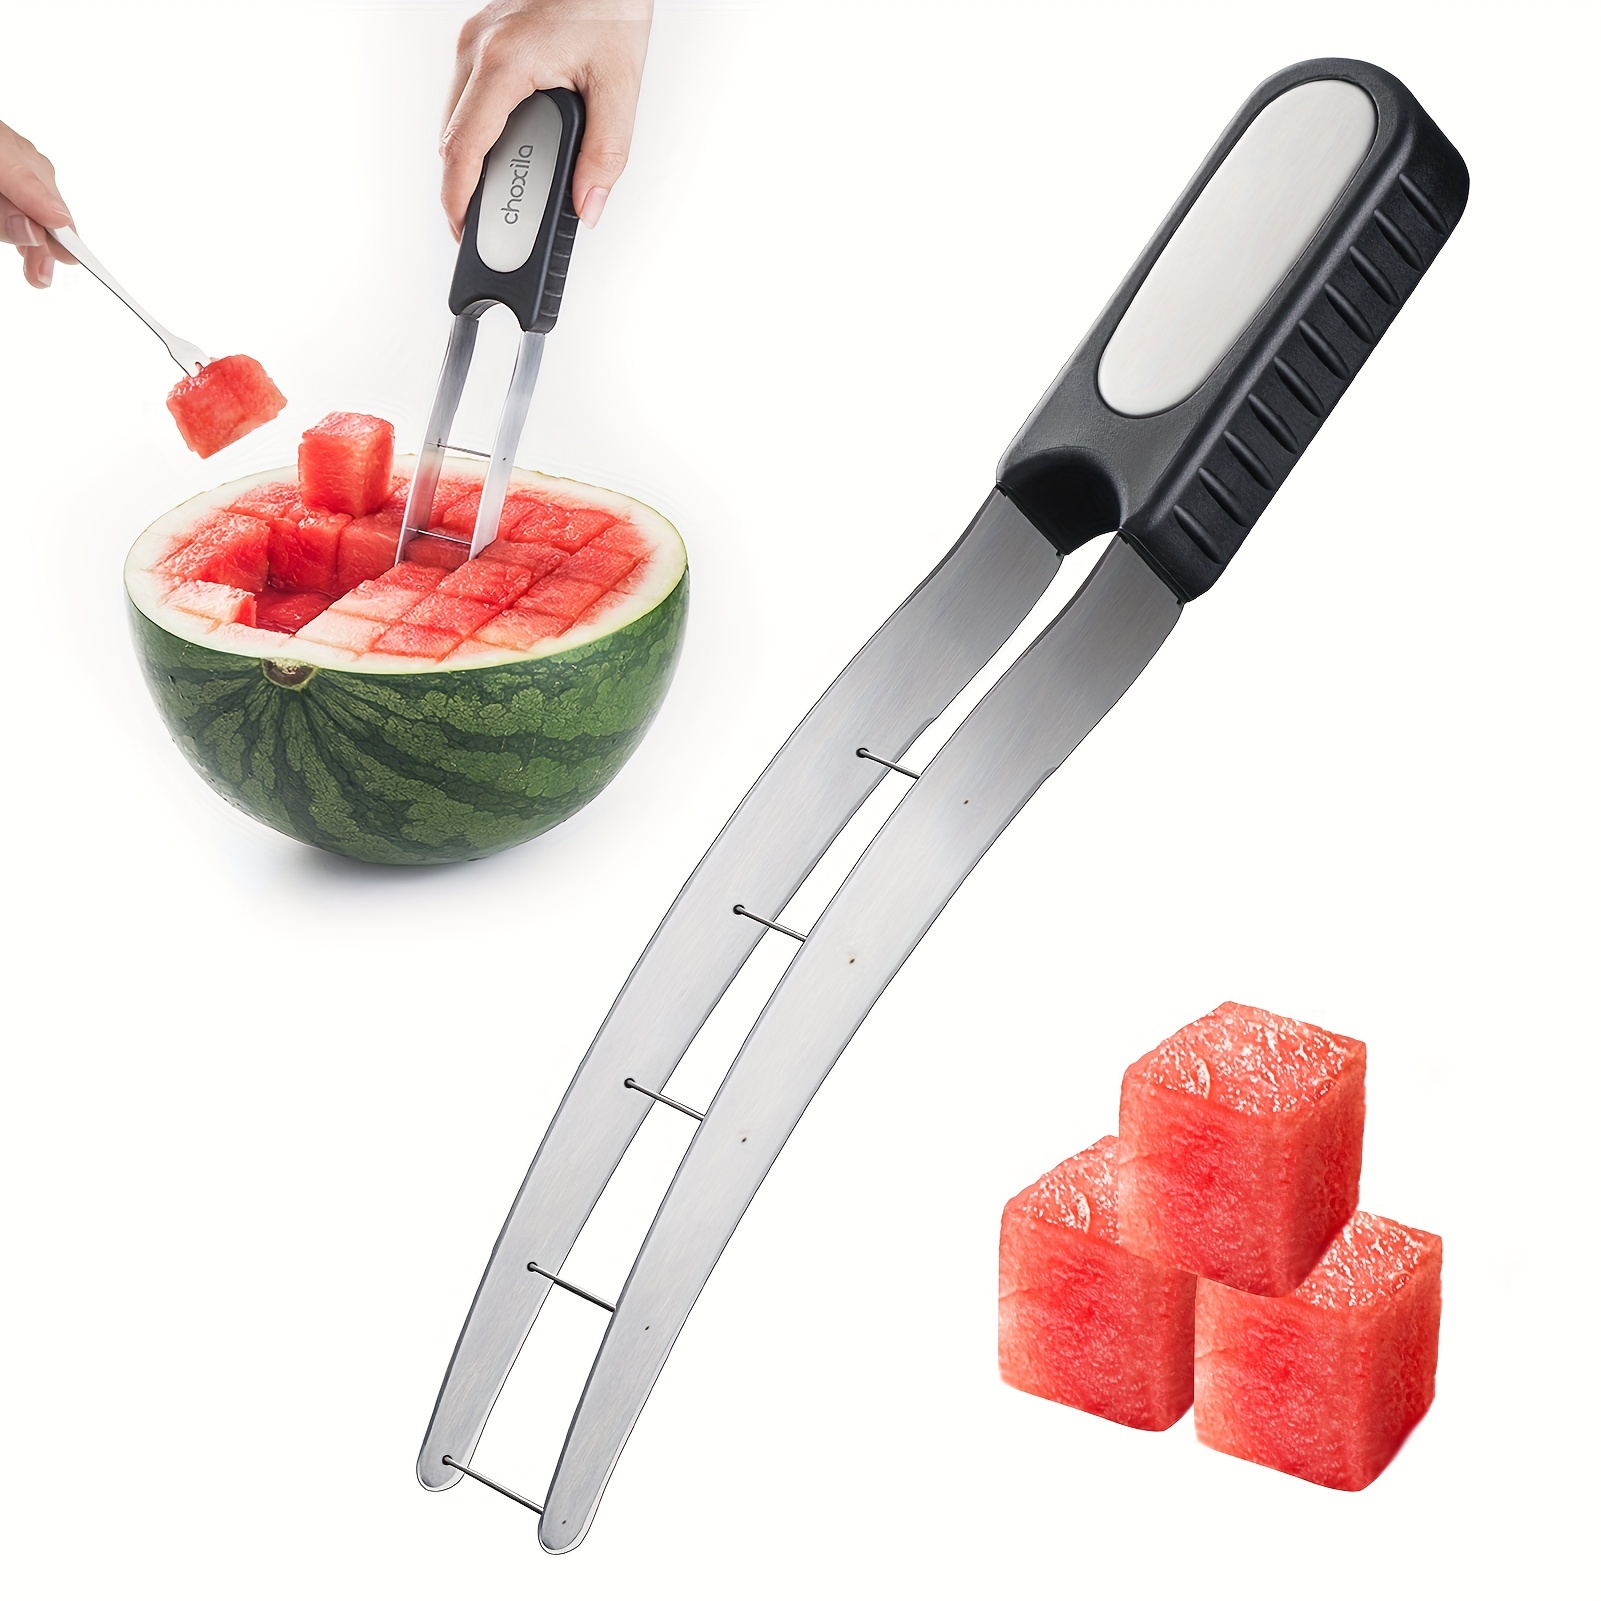  Kit de cortador de molino de viento de sandía, cortador de  sandía de acero inoxidable con cuchara de melón, cuchillo para tallar frutas,  herramientas de utensilios para cocina (02) : Hogar